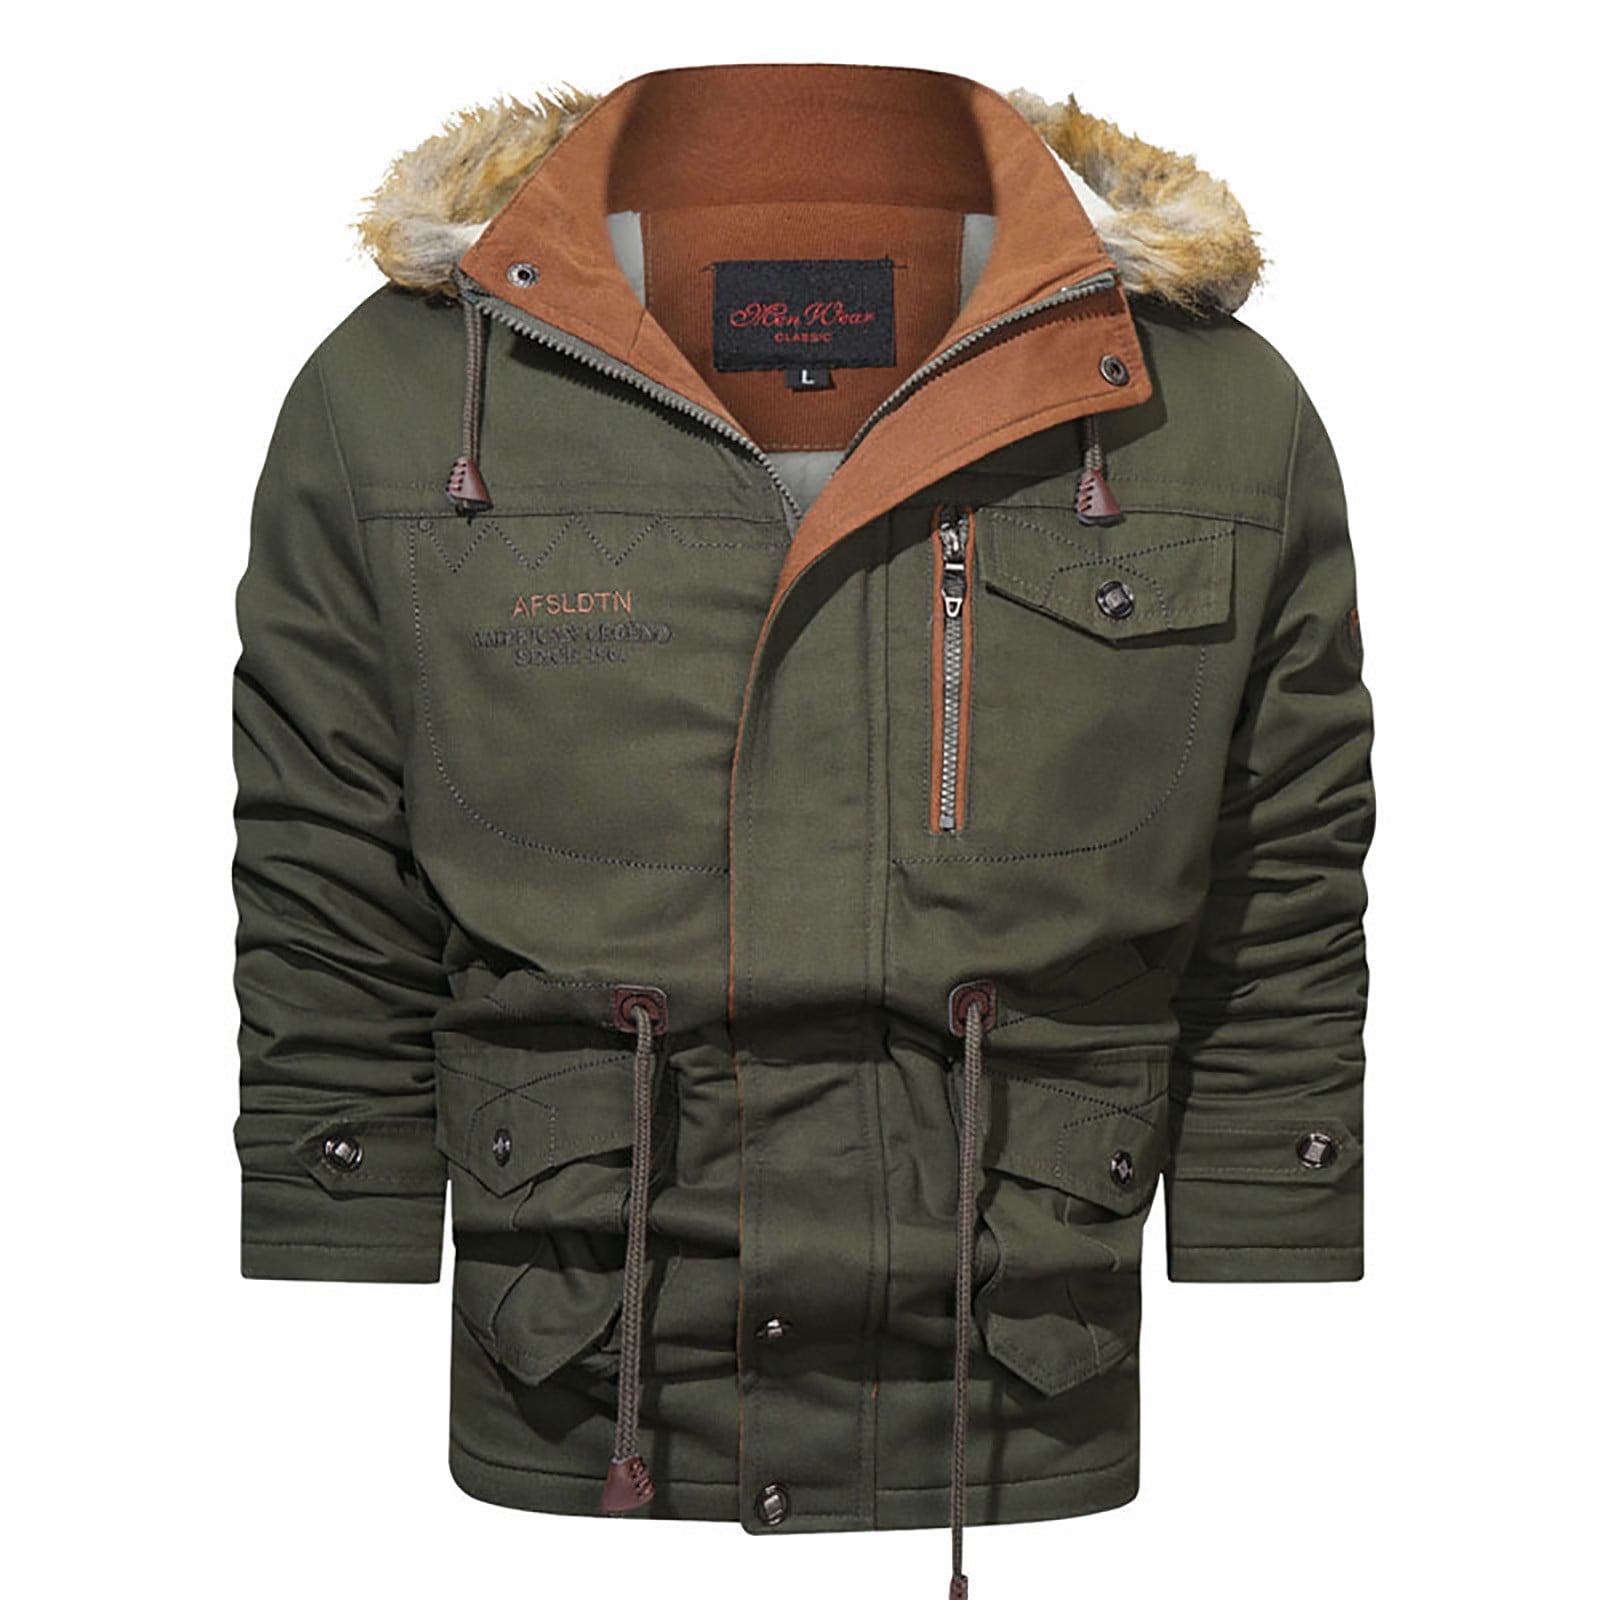 Summon Ernest Shackleton Expertise Bnwani Men's Wool Blazers Long Sleeve Plus Size Deals Fashion 2022 Cardigan  Winter Coat for Women New Deals Peacoat Army Green 3XL - Walmart.com